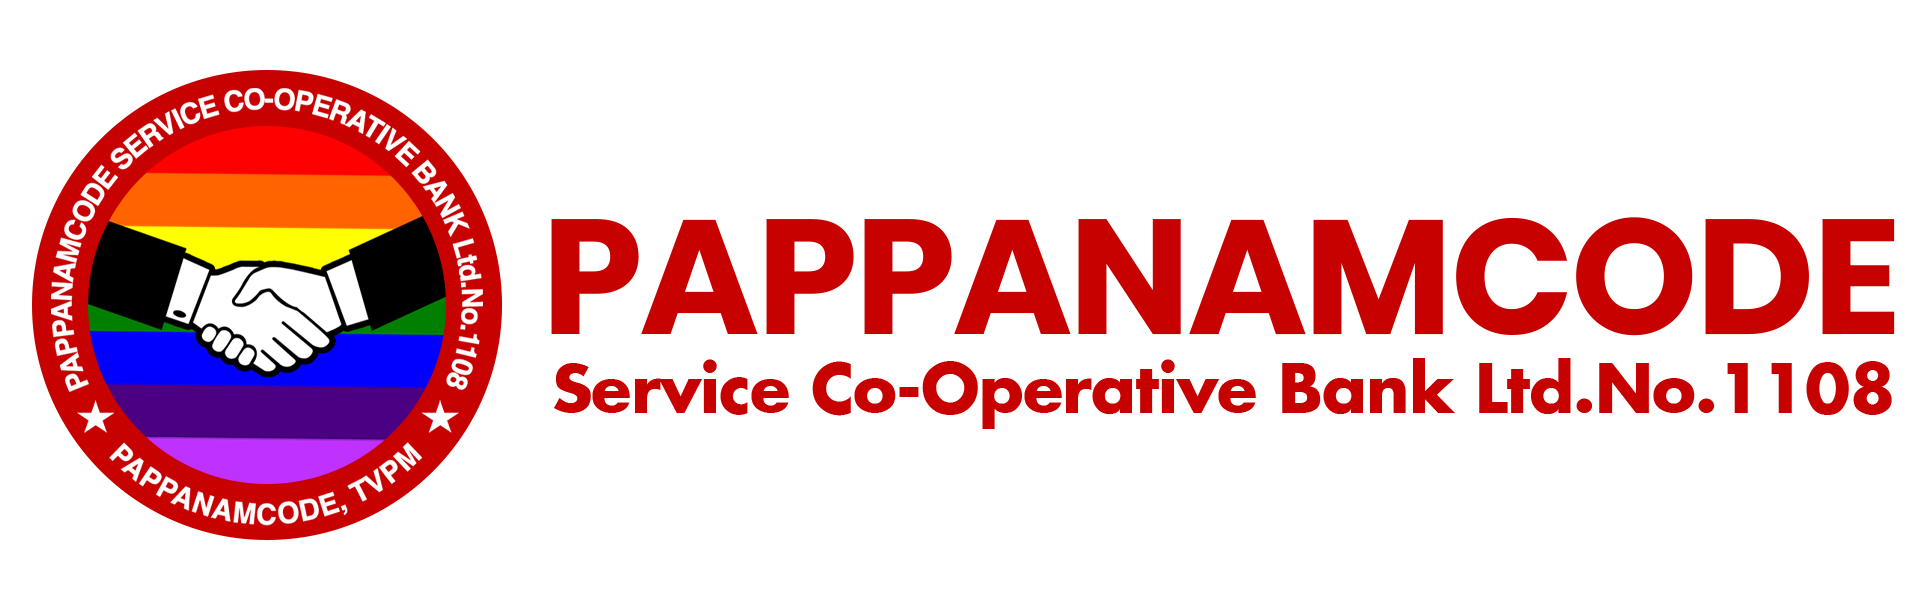 Pappanamcode Service Co-operative Bank Ltd